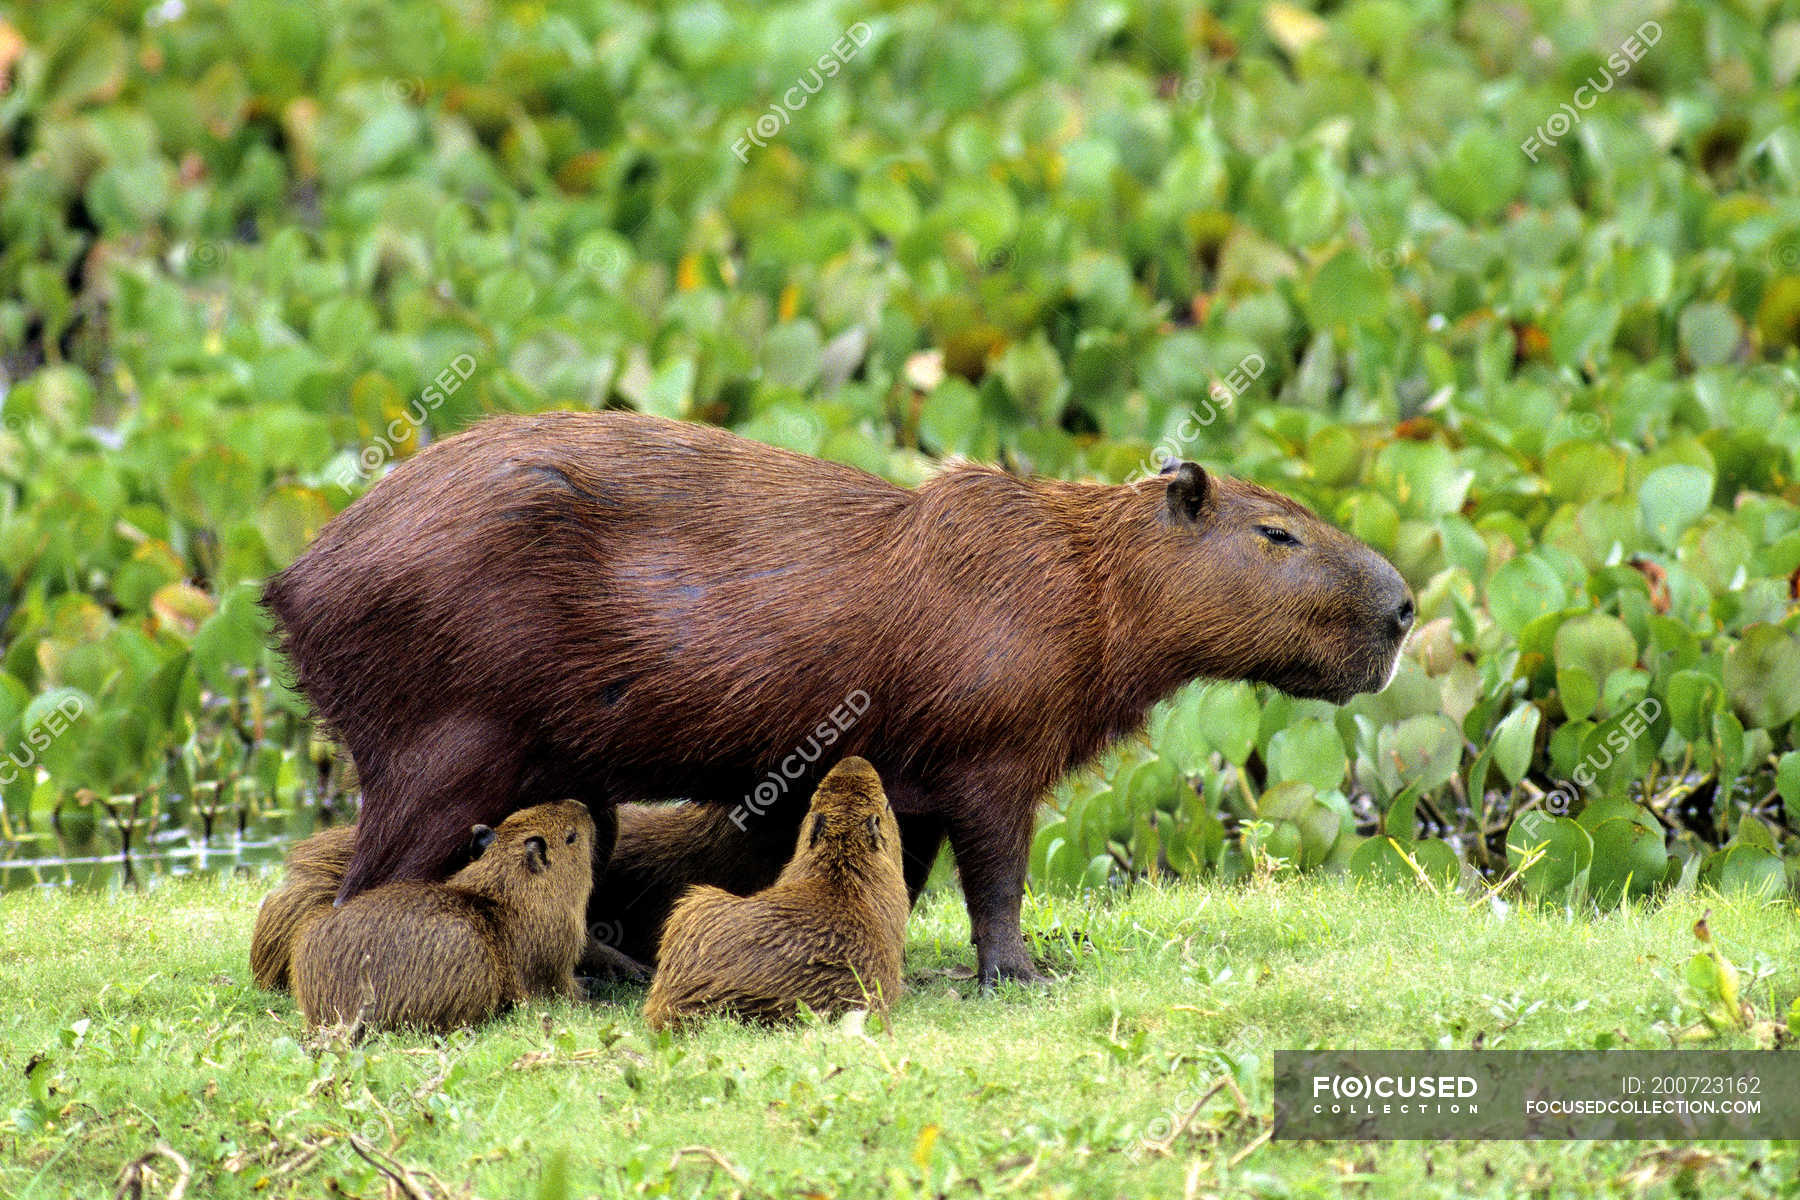 Capibara de enfermería caminando con cachorros en Brasil, América del Sur —  Animales en la naturaleza, fauna - Stock Photo | #200723162